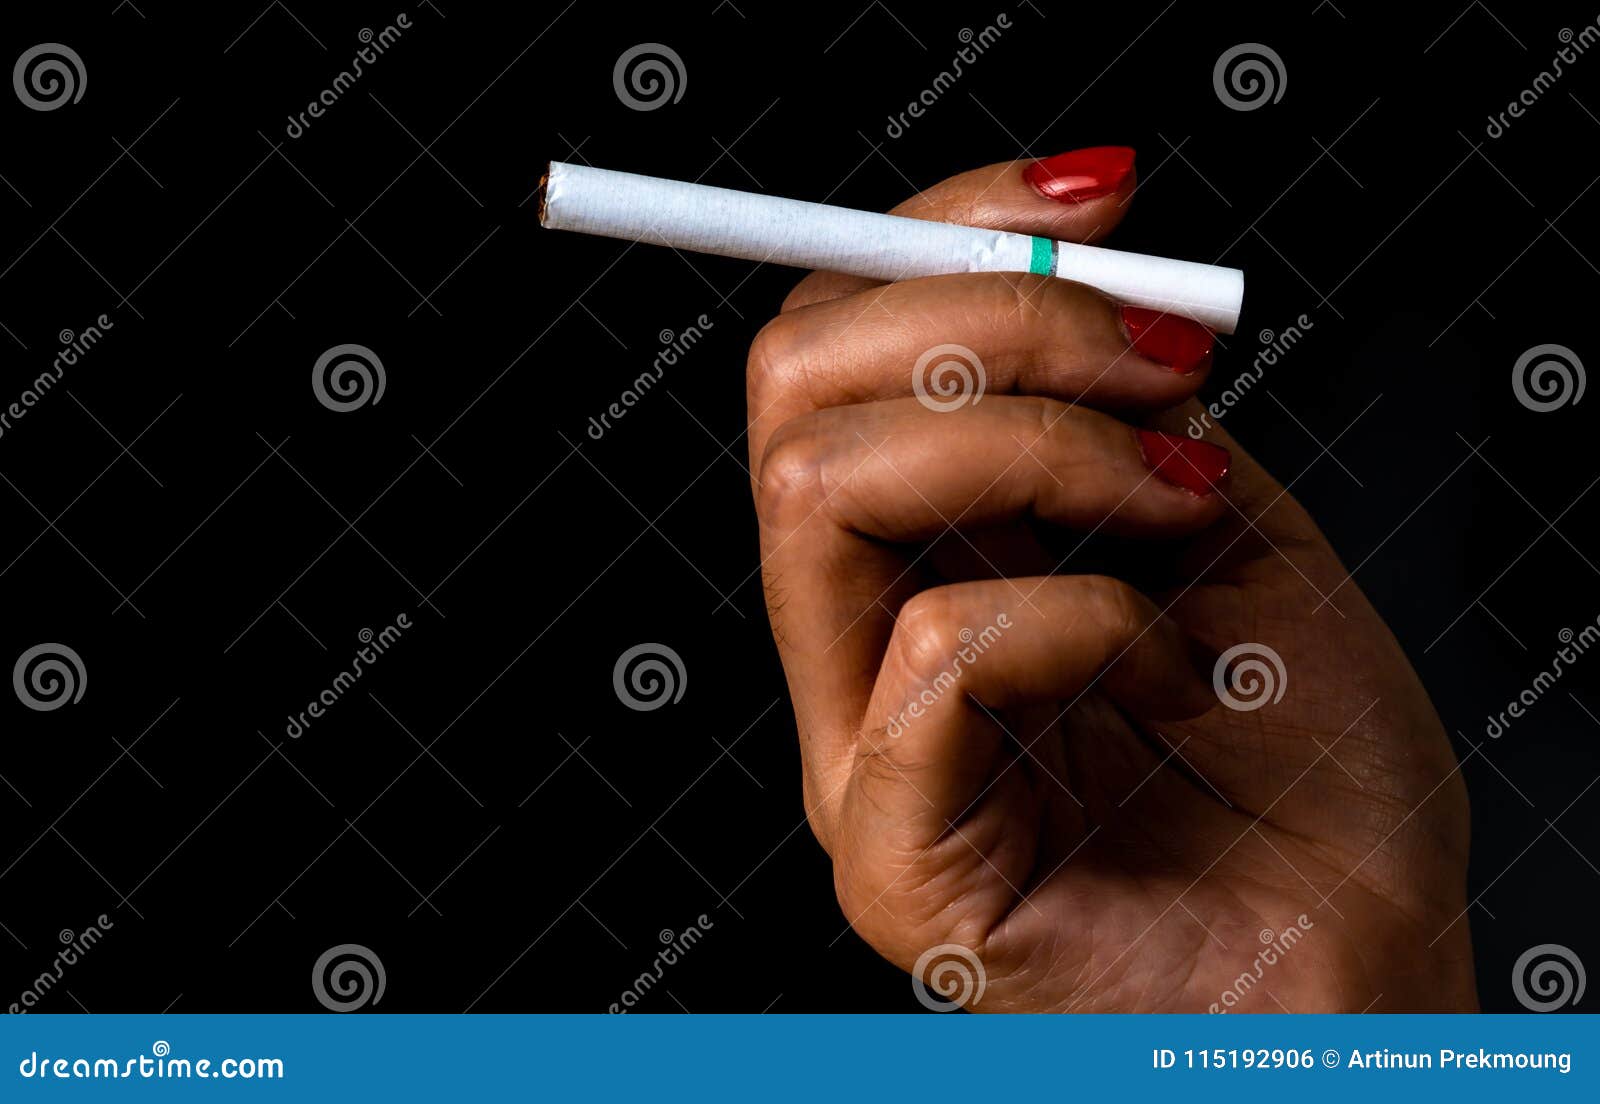 6. Cigarette Nail Art Tutorial - wide 3